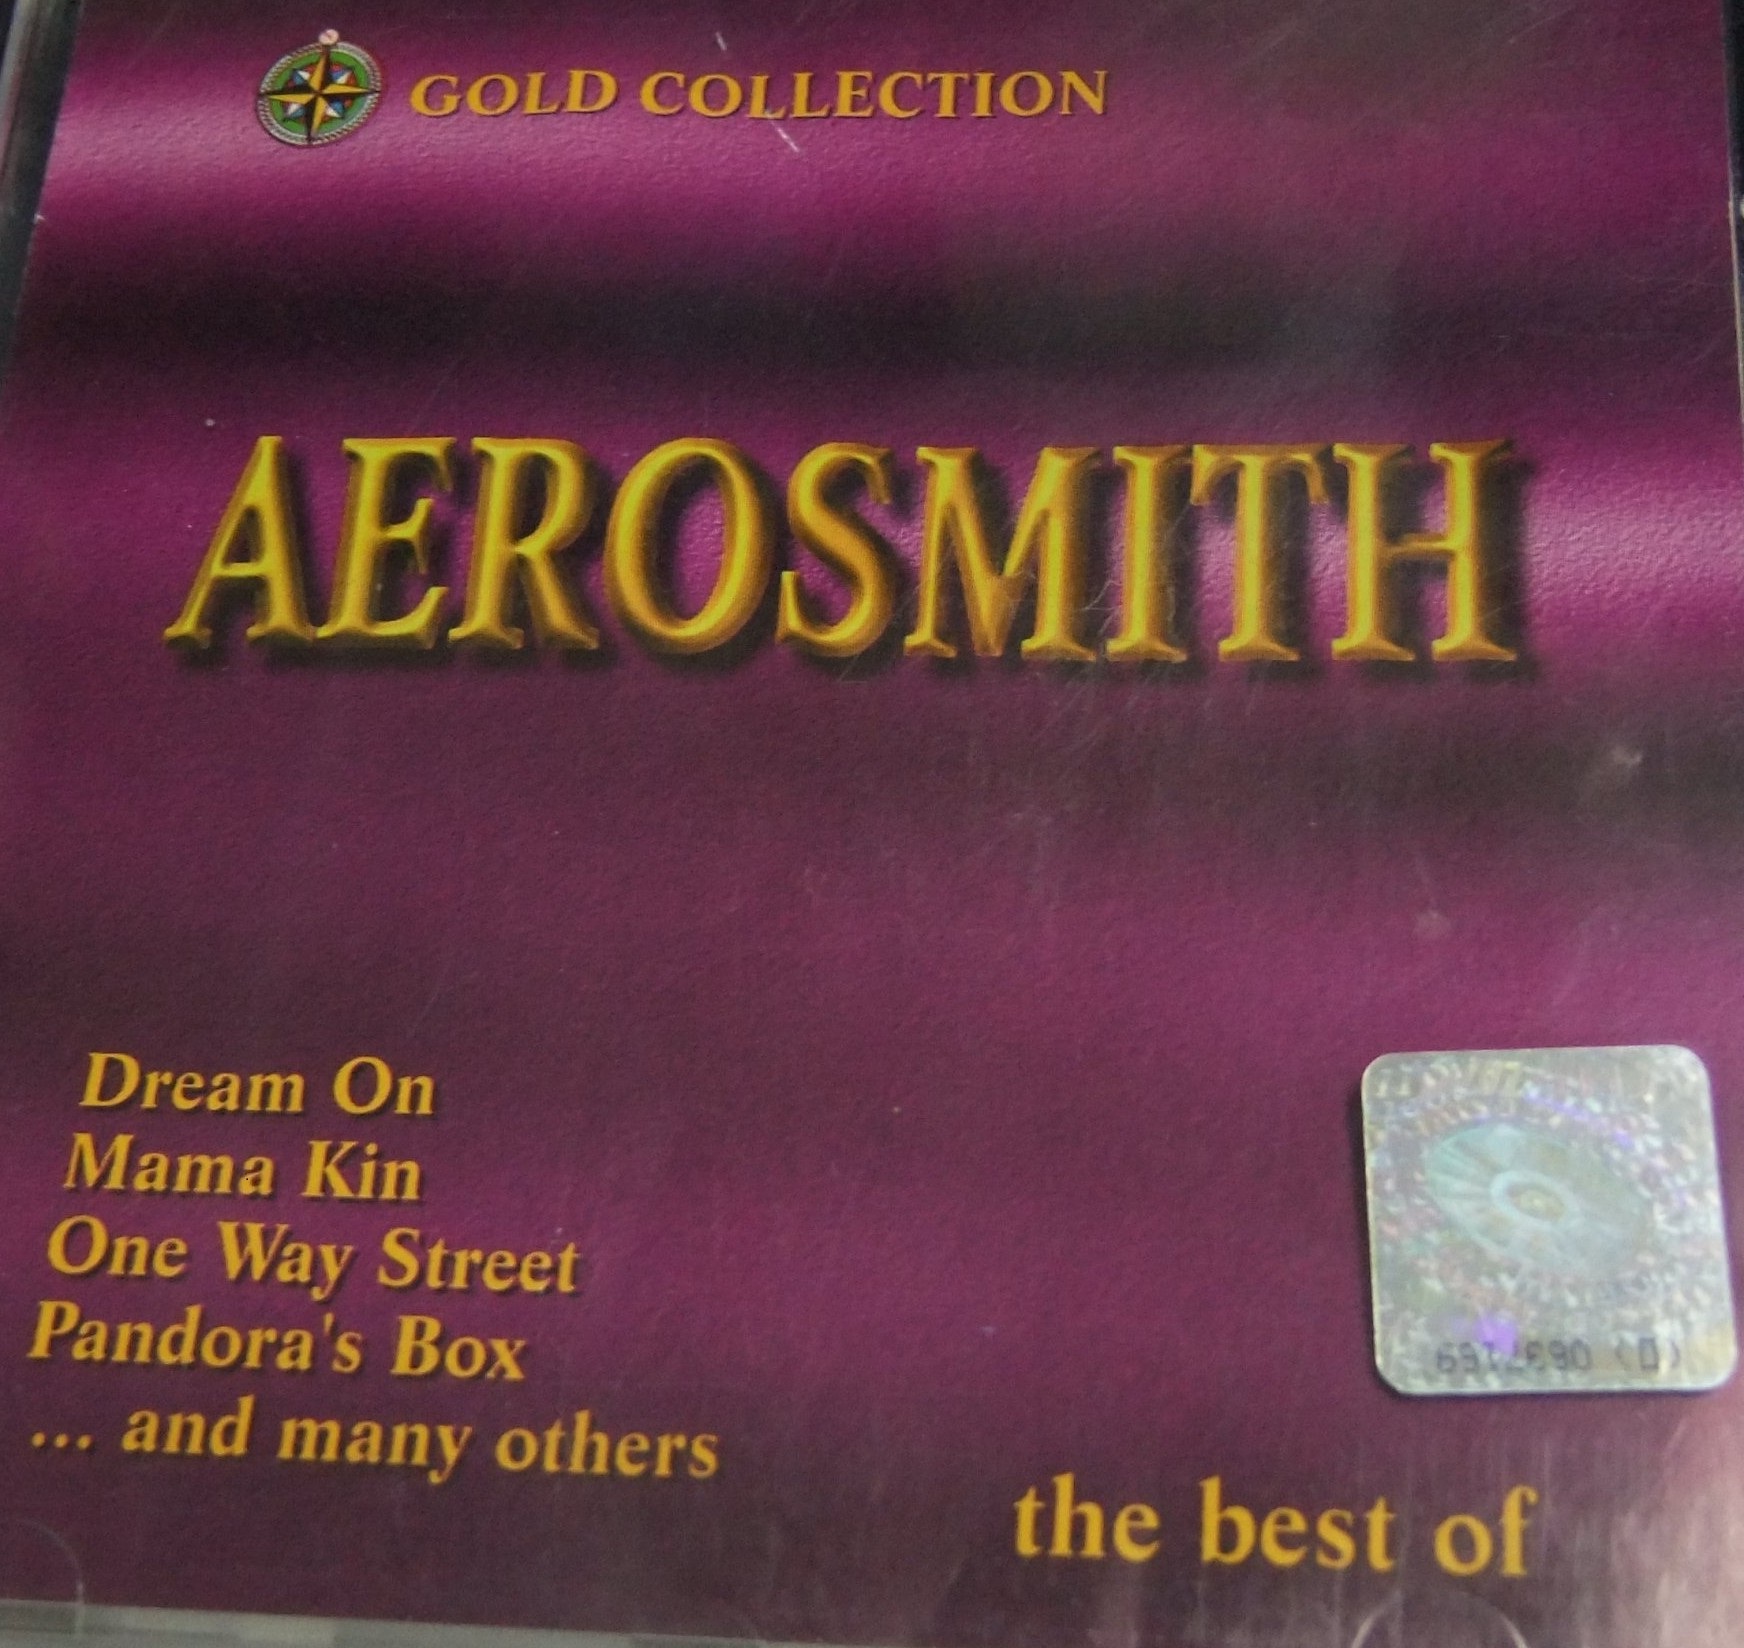 AEROSMITH – Best Of.